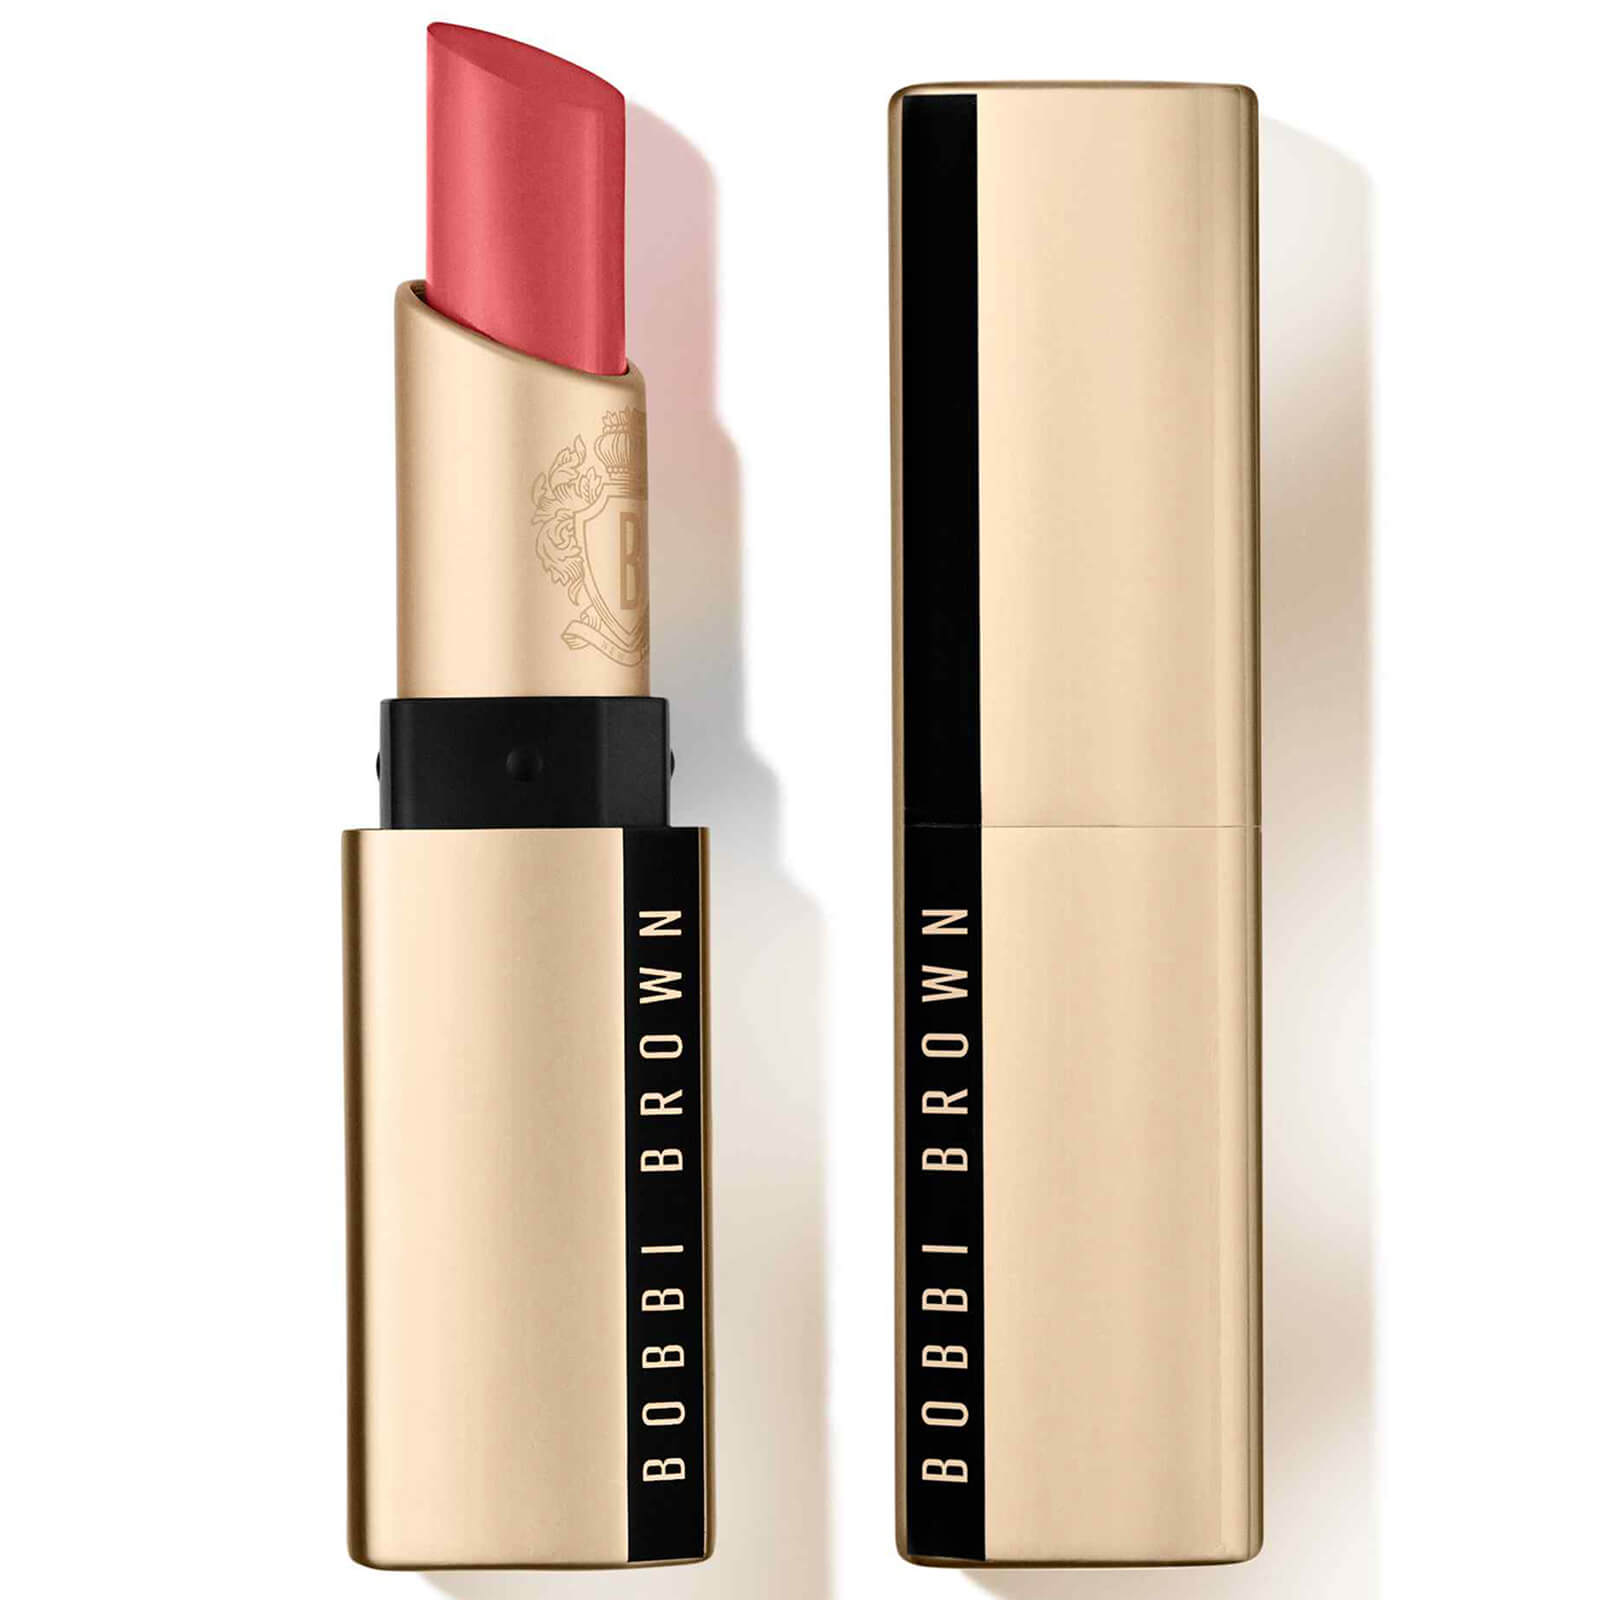 Bobbi Brown Luxe Matte Lipstick 3.5g (Various Shades) - Big City